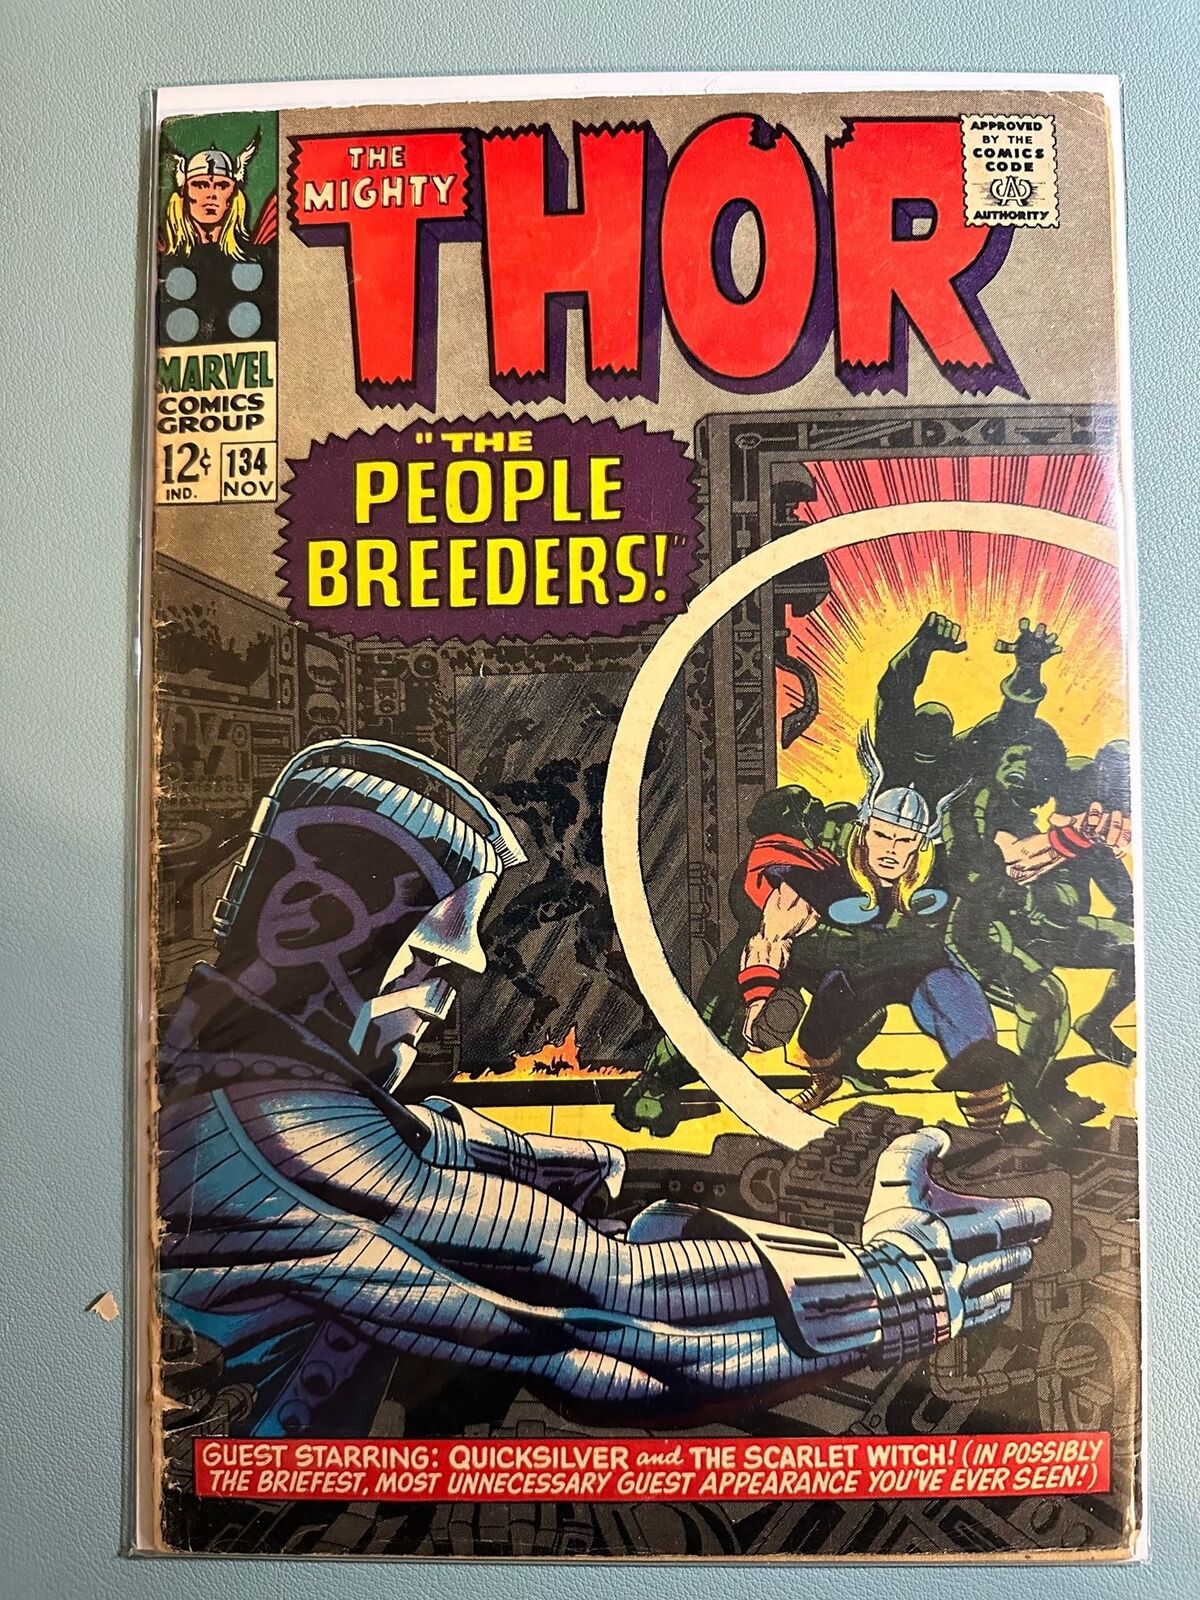 Thor(vol. 1) #134 - 1st App High Evolutionary + Man Beast - Marvel Key issue